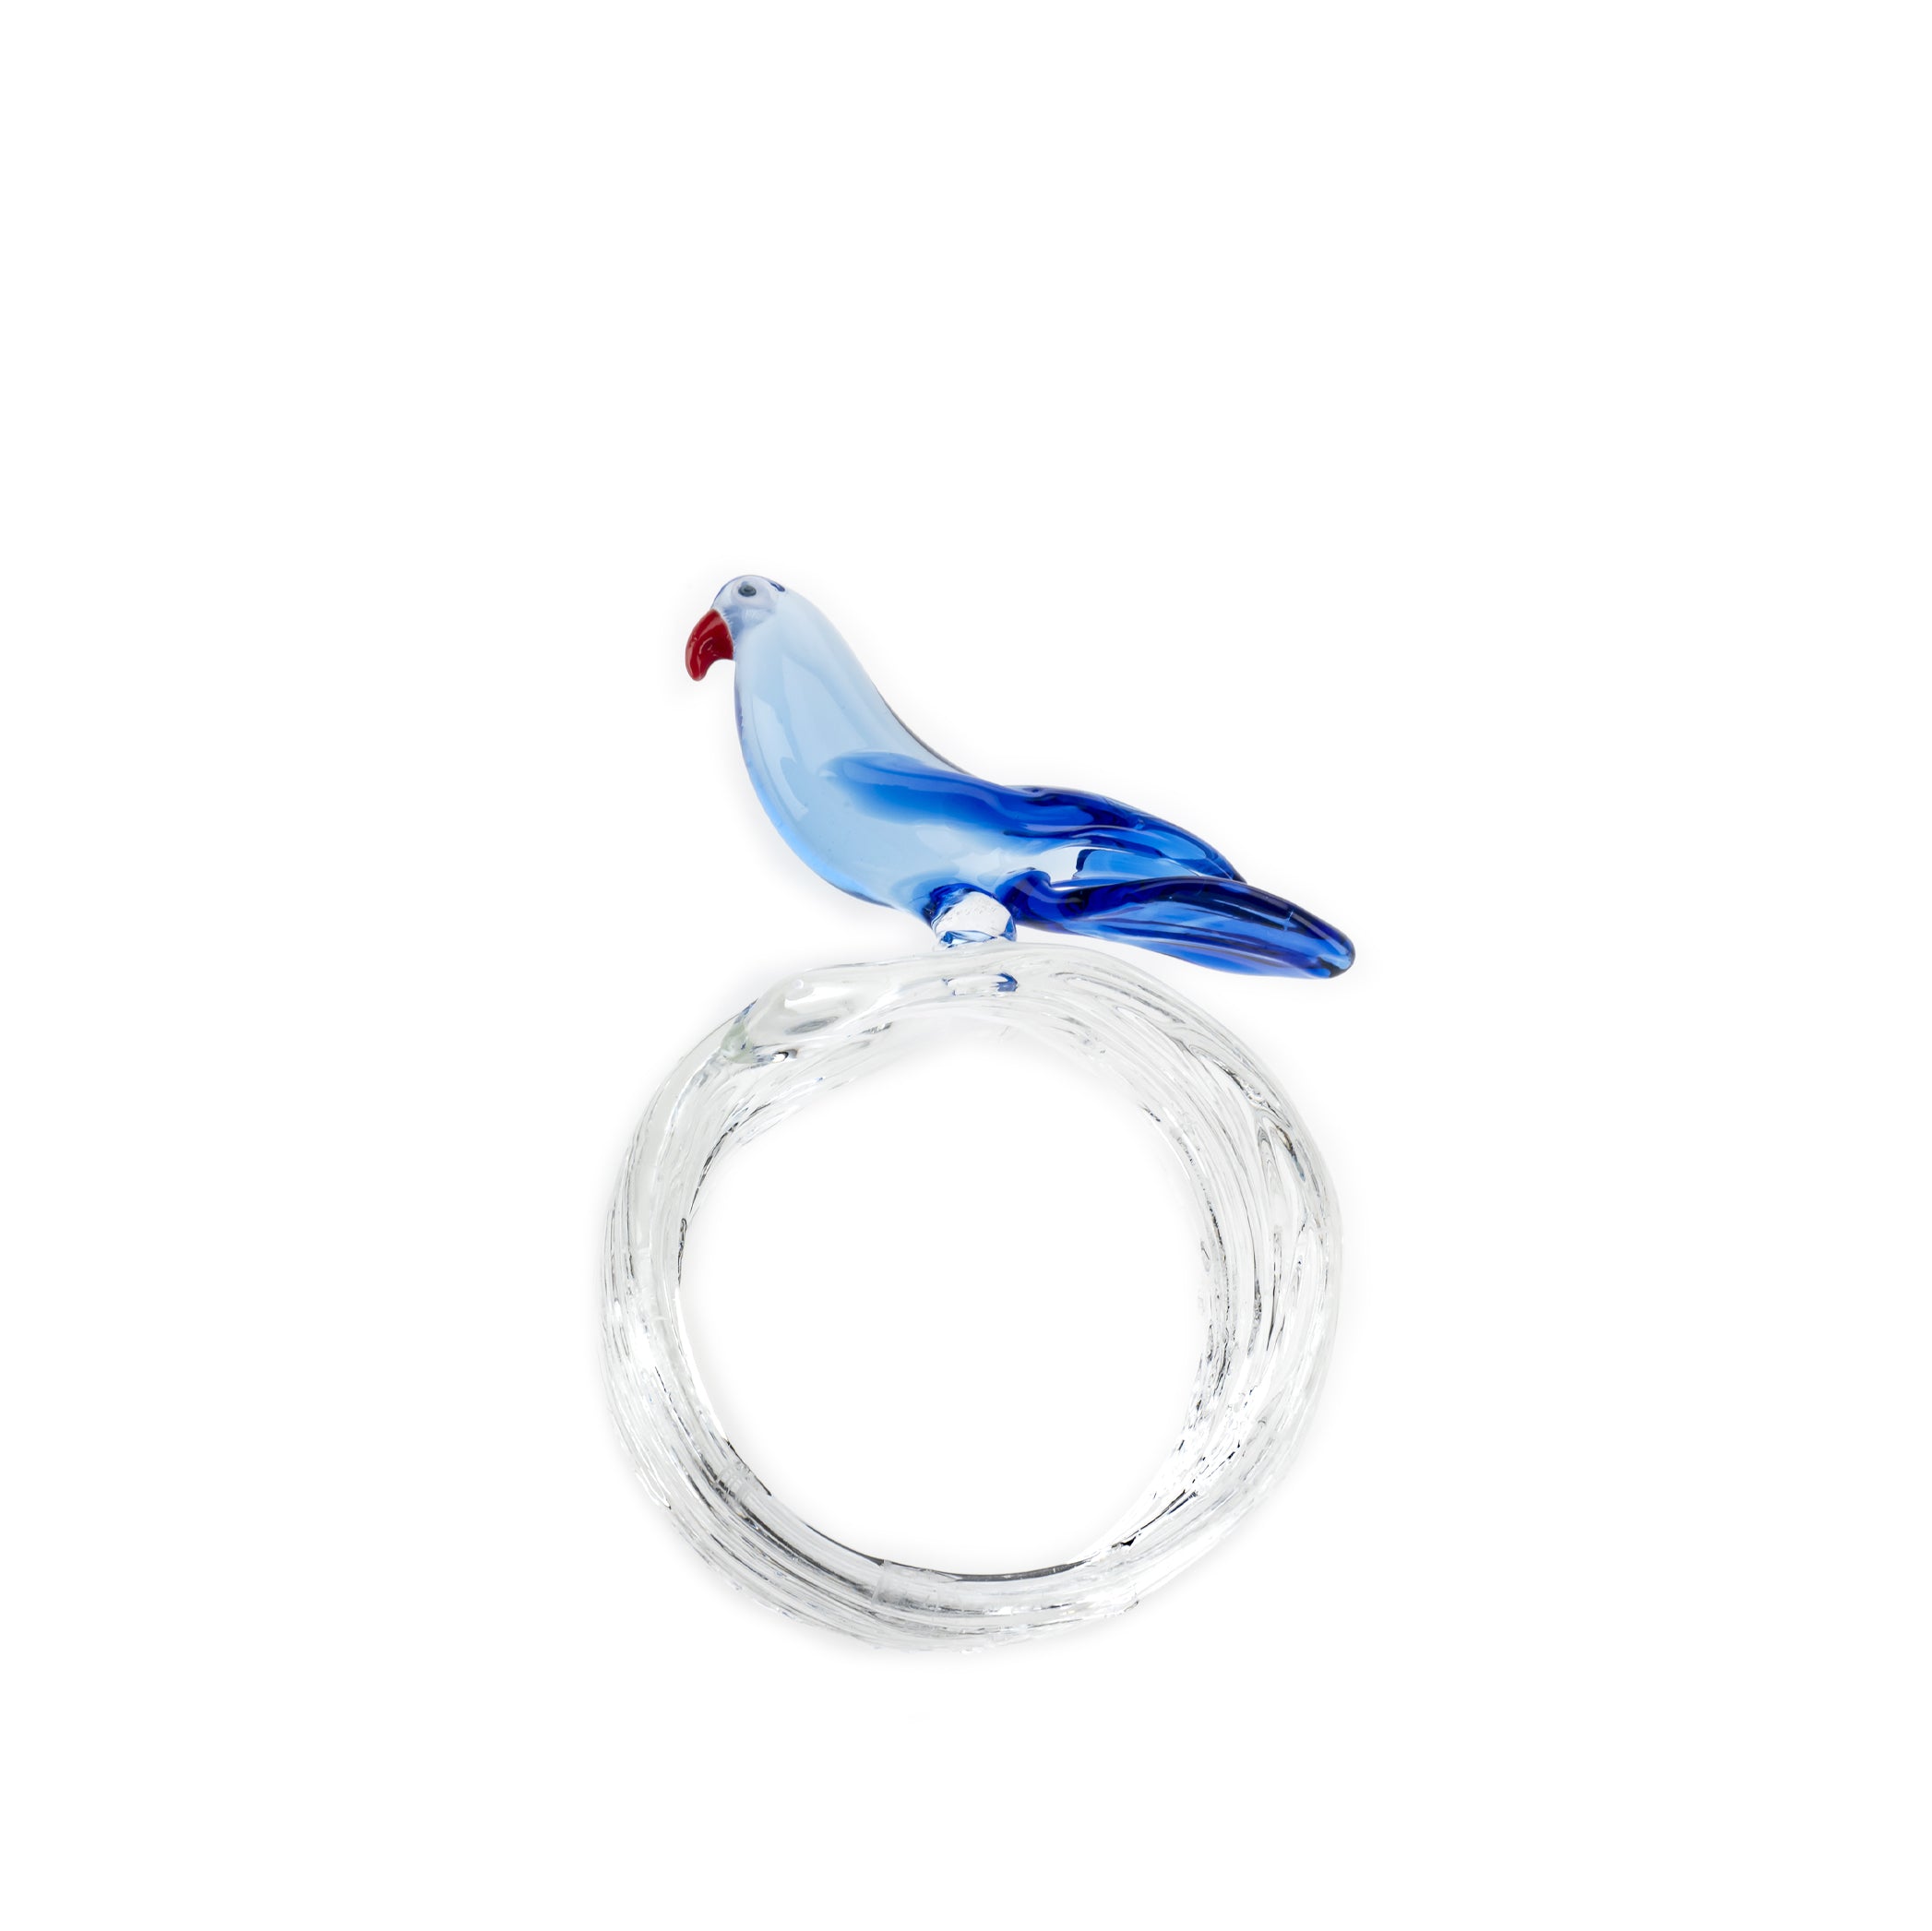 Handblown Glass Tropical Bird Napkin Ring in Blue